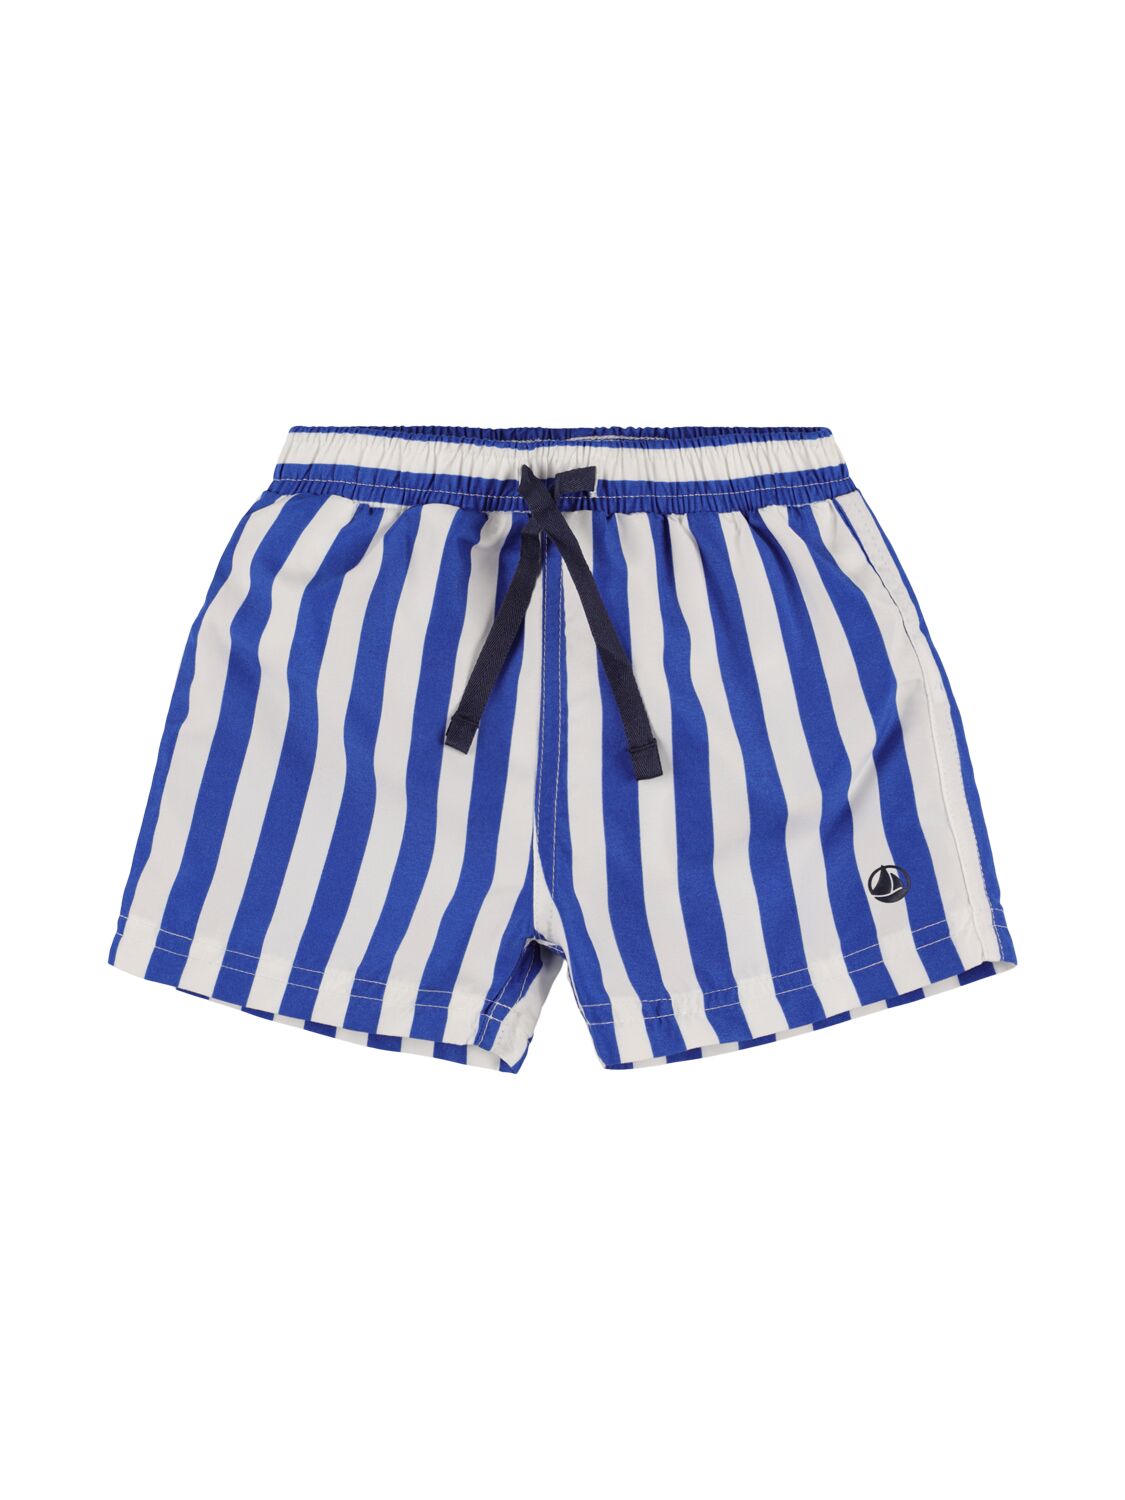 Image of Striped Tech Swim Shorts